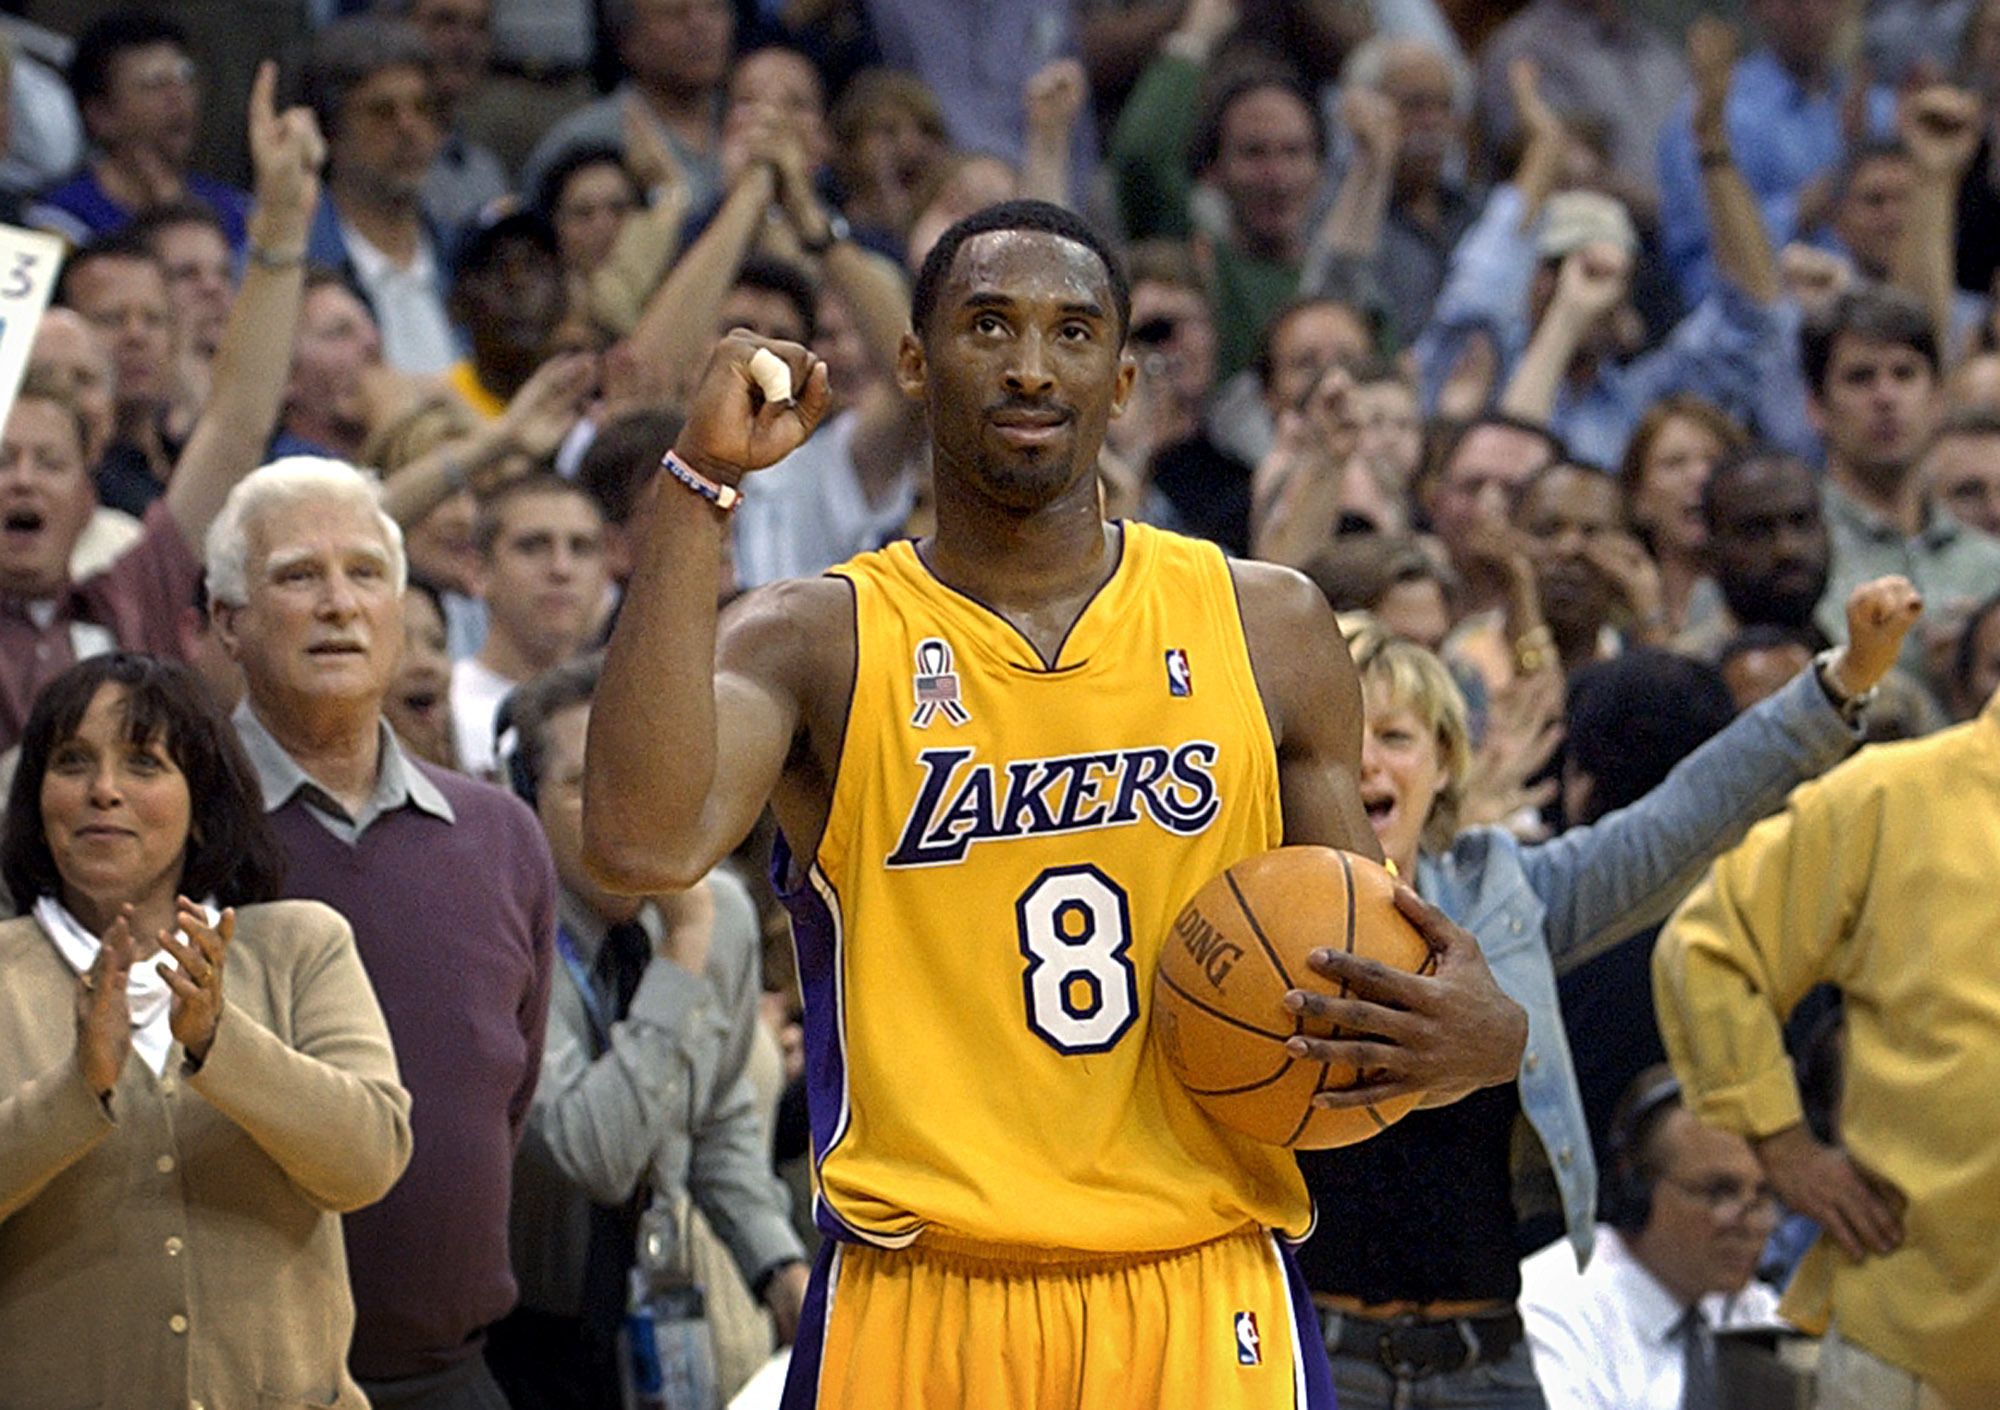 Mamba Out': Kobe Bryant leaves legacy of inspiration